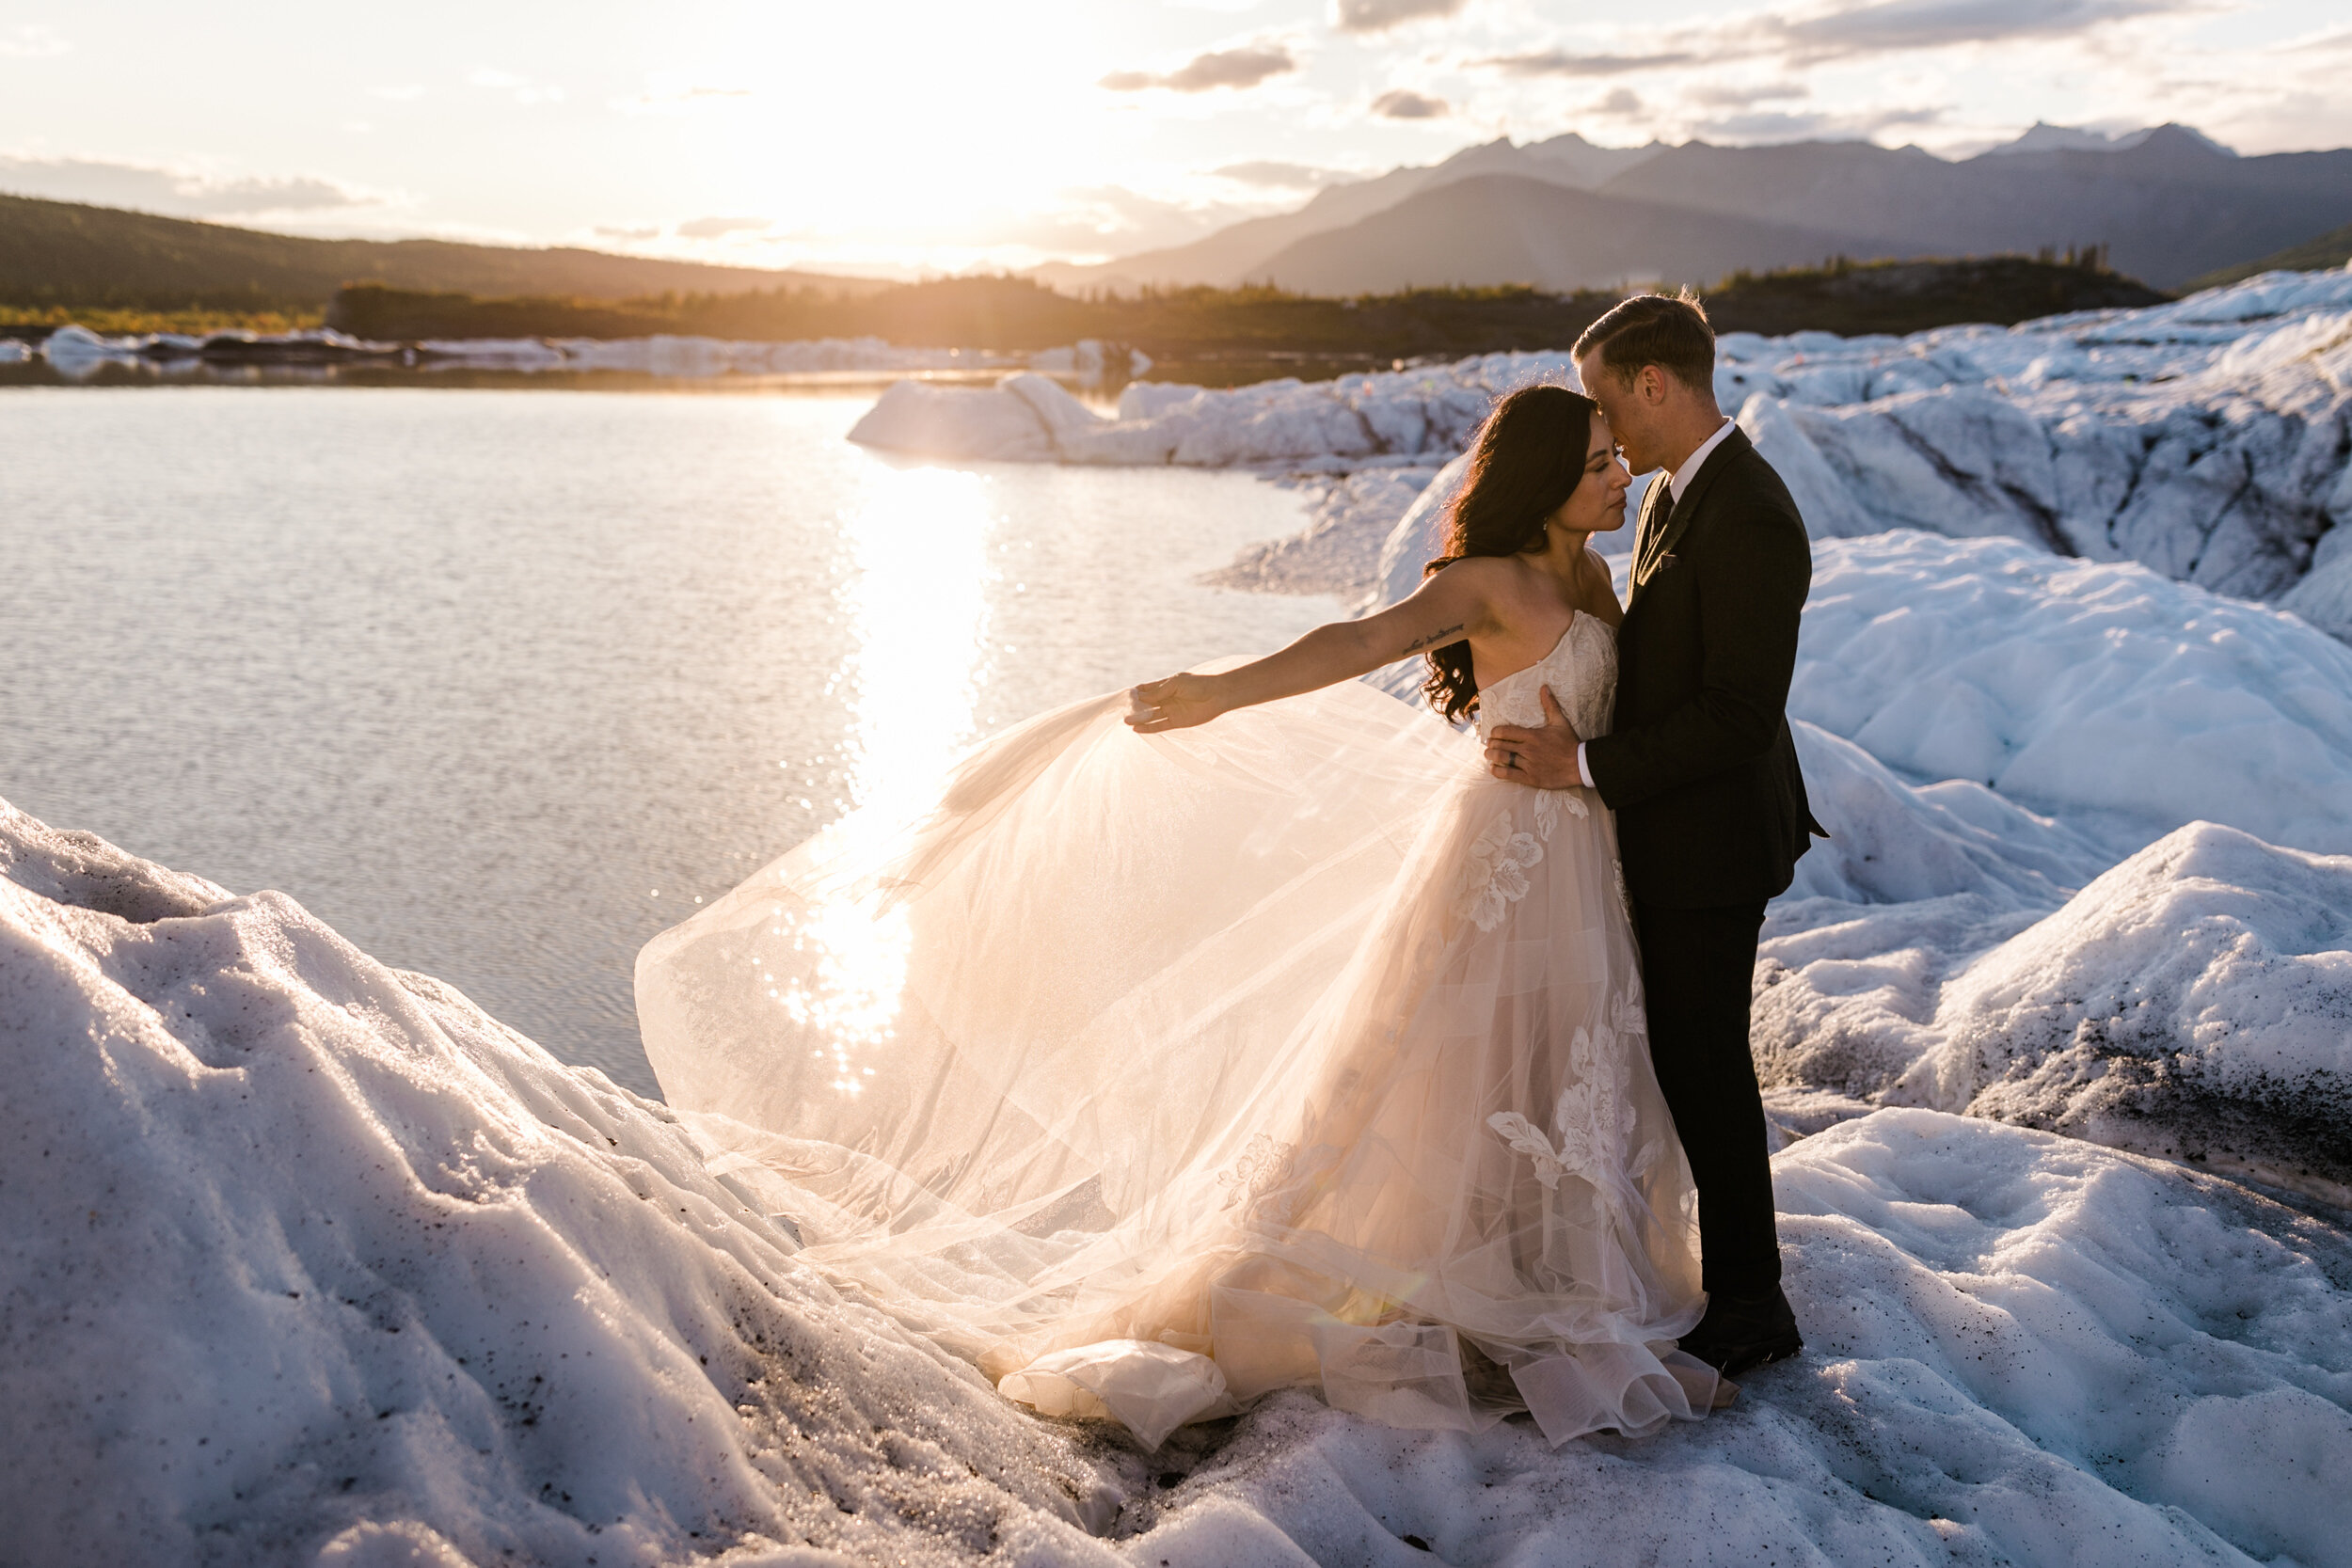 Glacier Hiking Elopement in Alaska | Day-After Wedding Session | Blush Wedding Dress | Dark Green Groom Suit | The Hearnes Adventure Photography